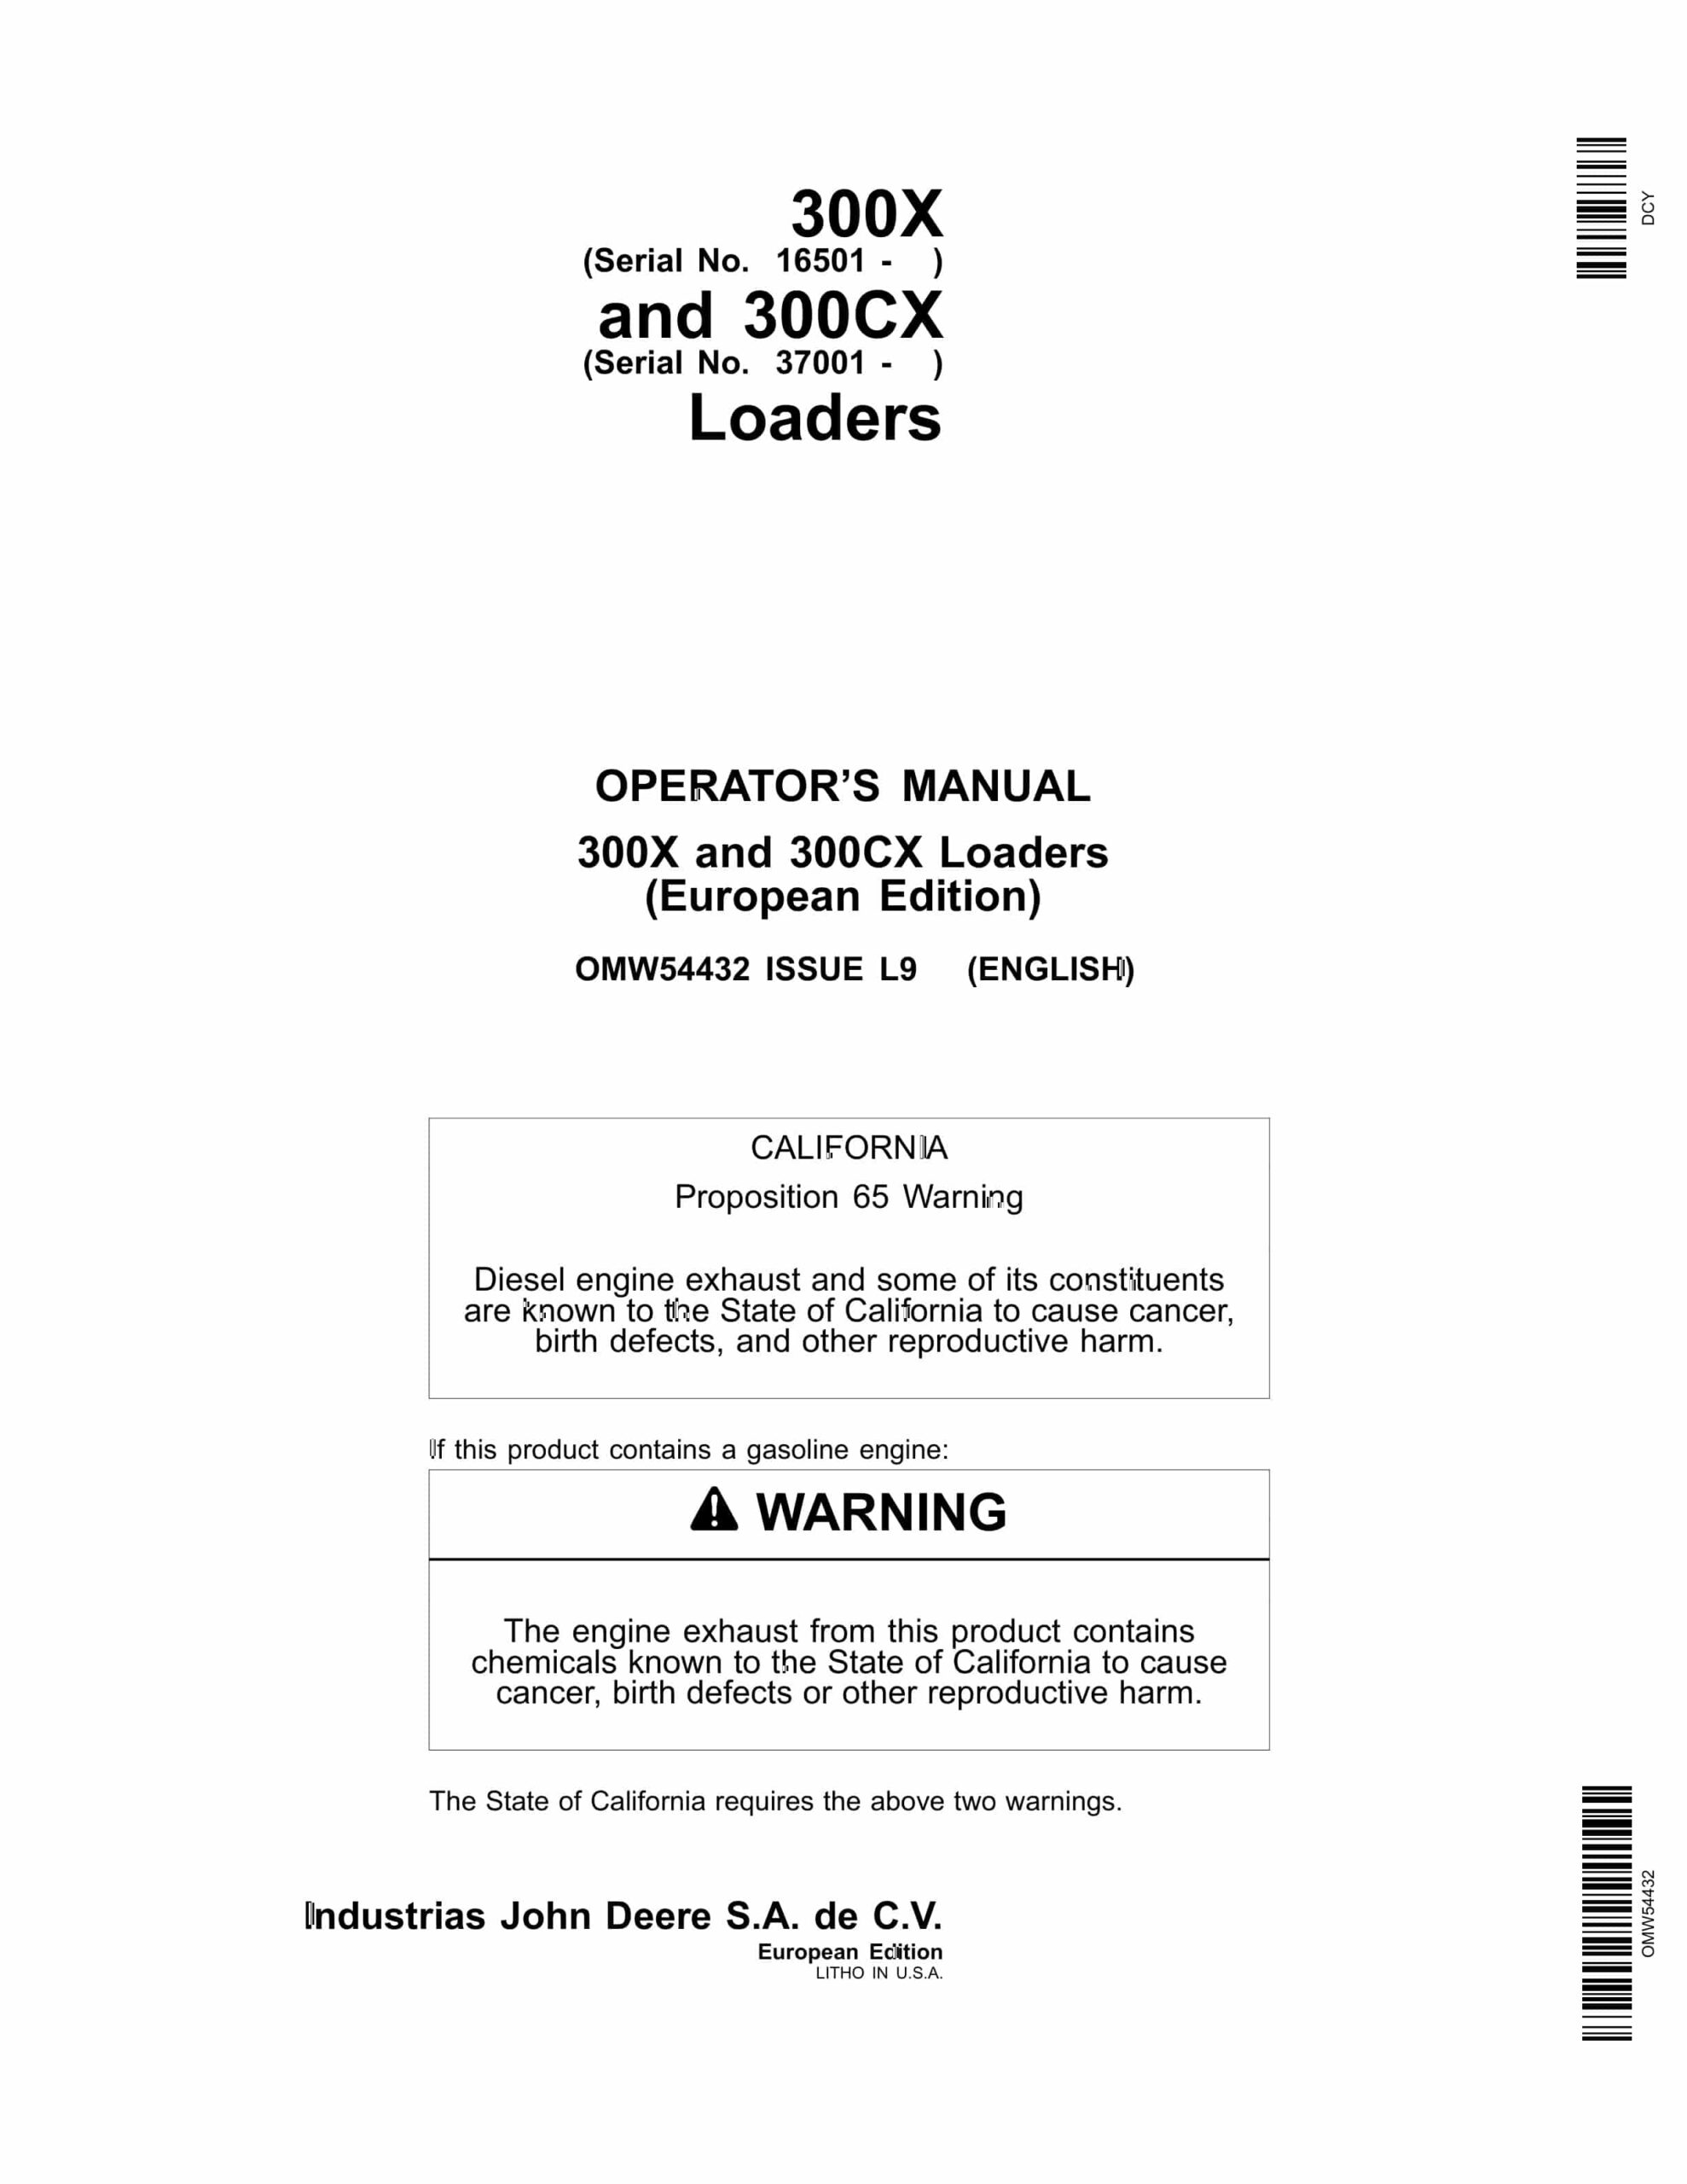 John Deere 300X and 300CX Loader Operator Manual OMW54432-1